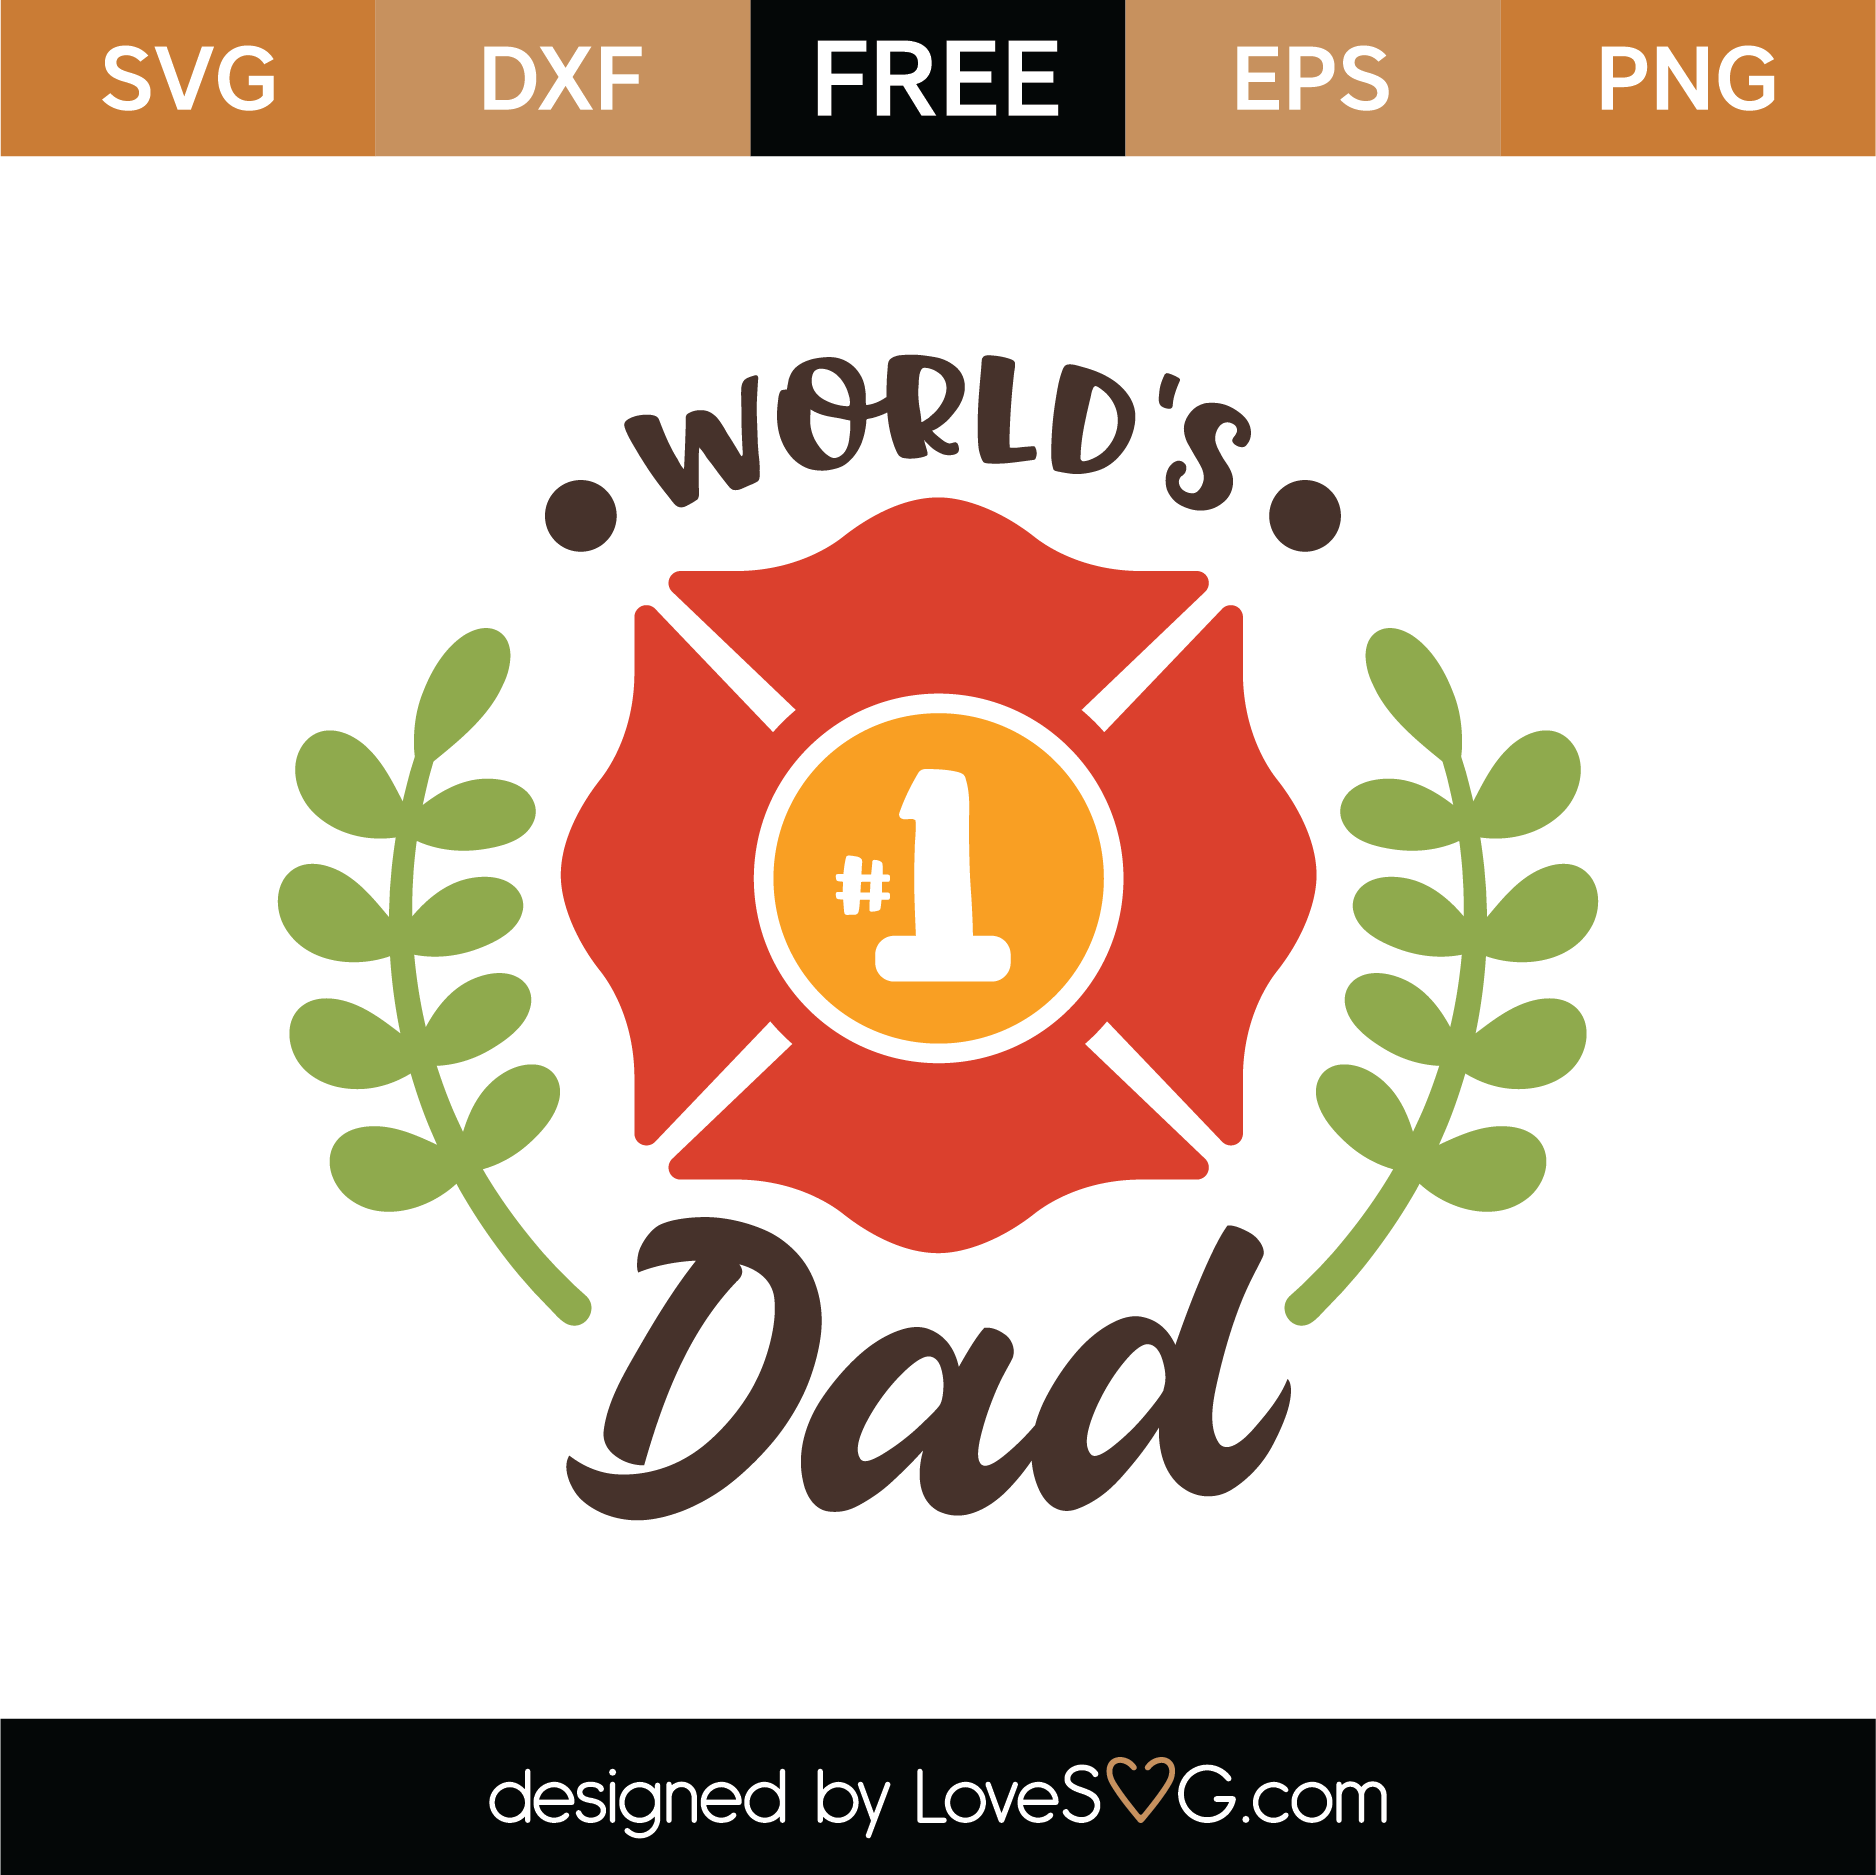 Download Free World's #1 Dad SVG Cut File | Lovesvg.com